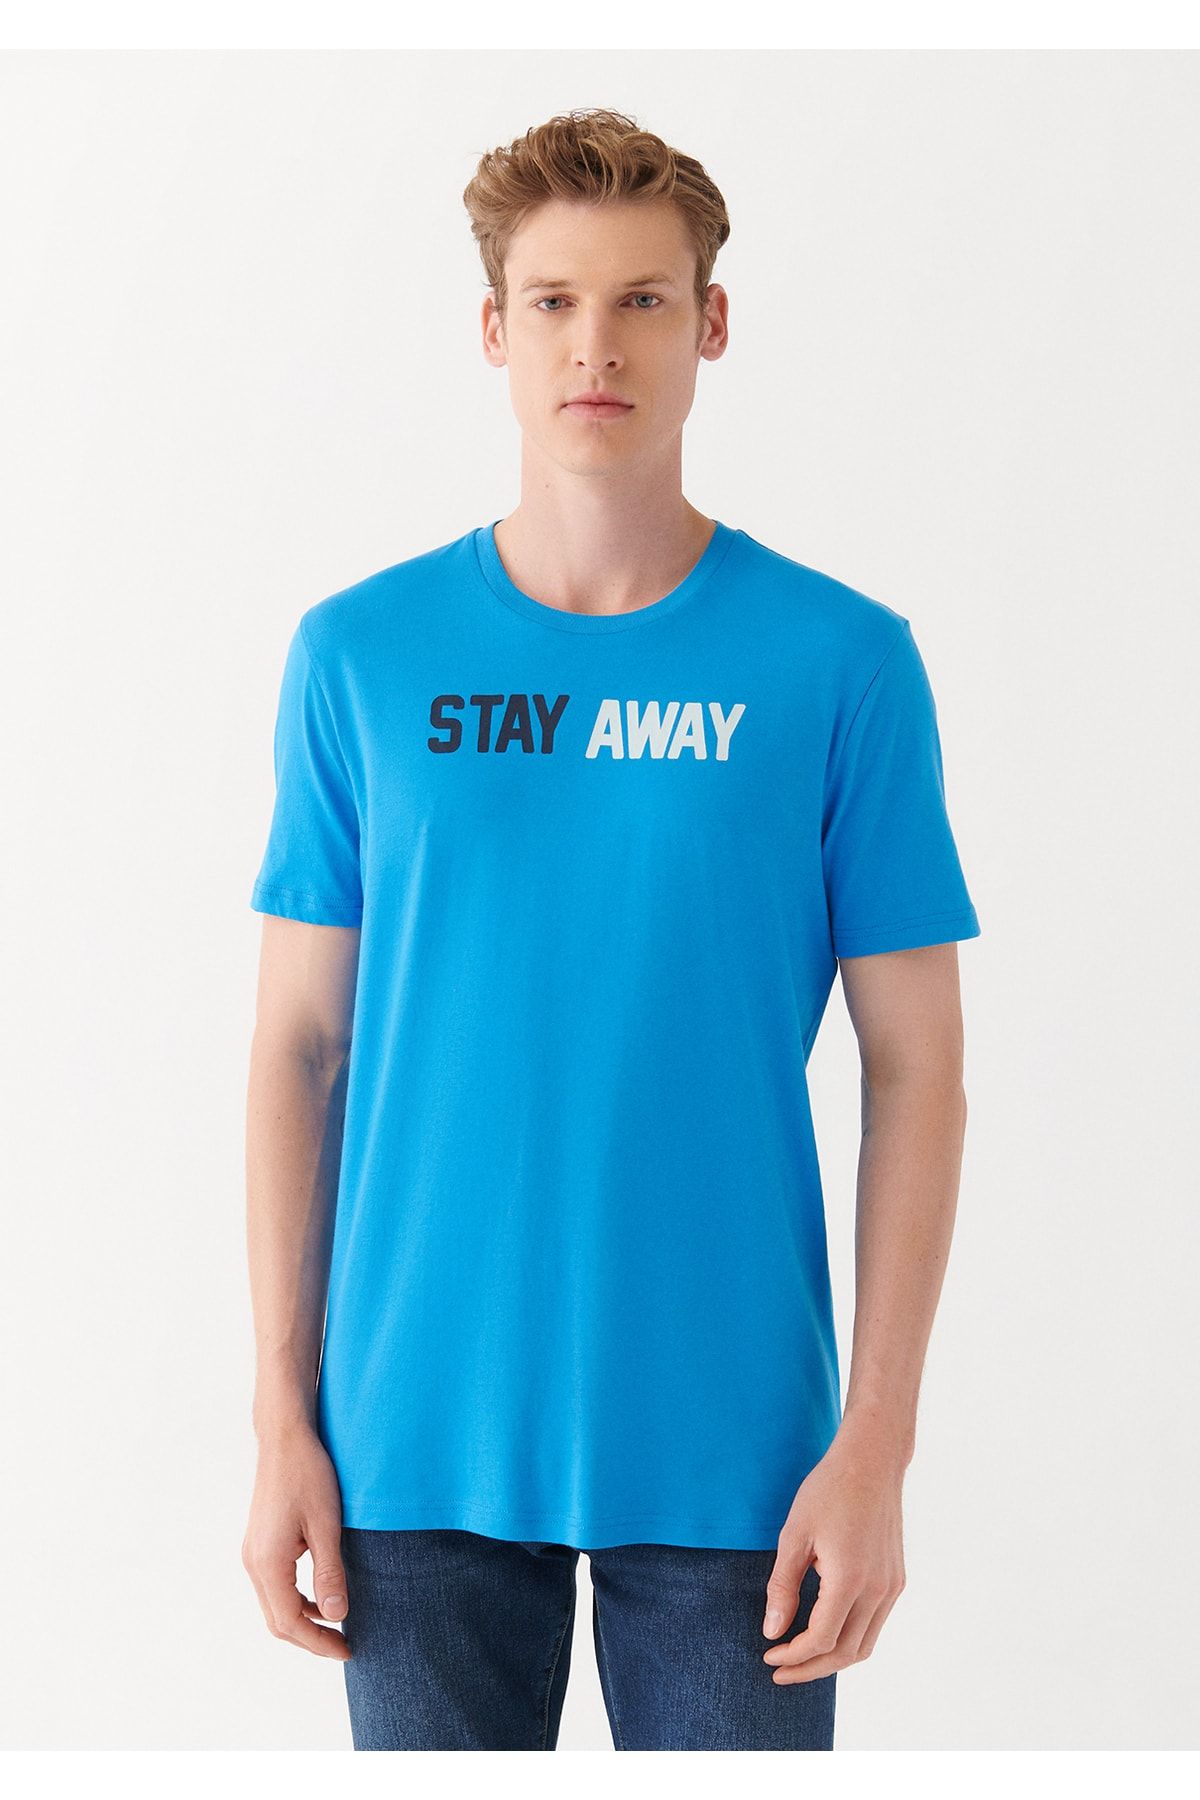 Mavi تی شرت چاپ شده تناسب باریک / برش 8810567-70772